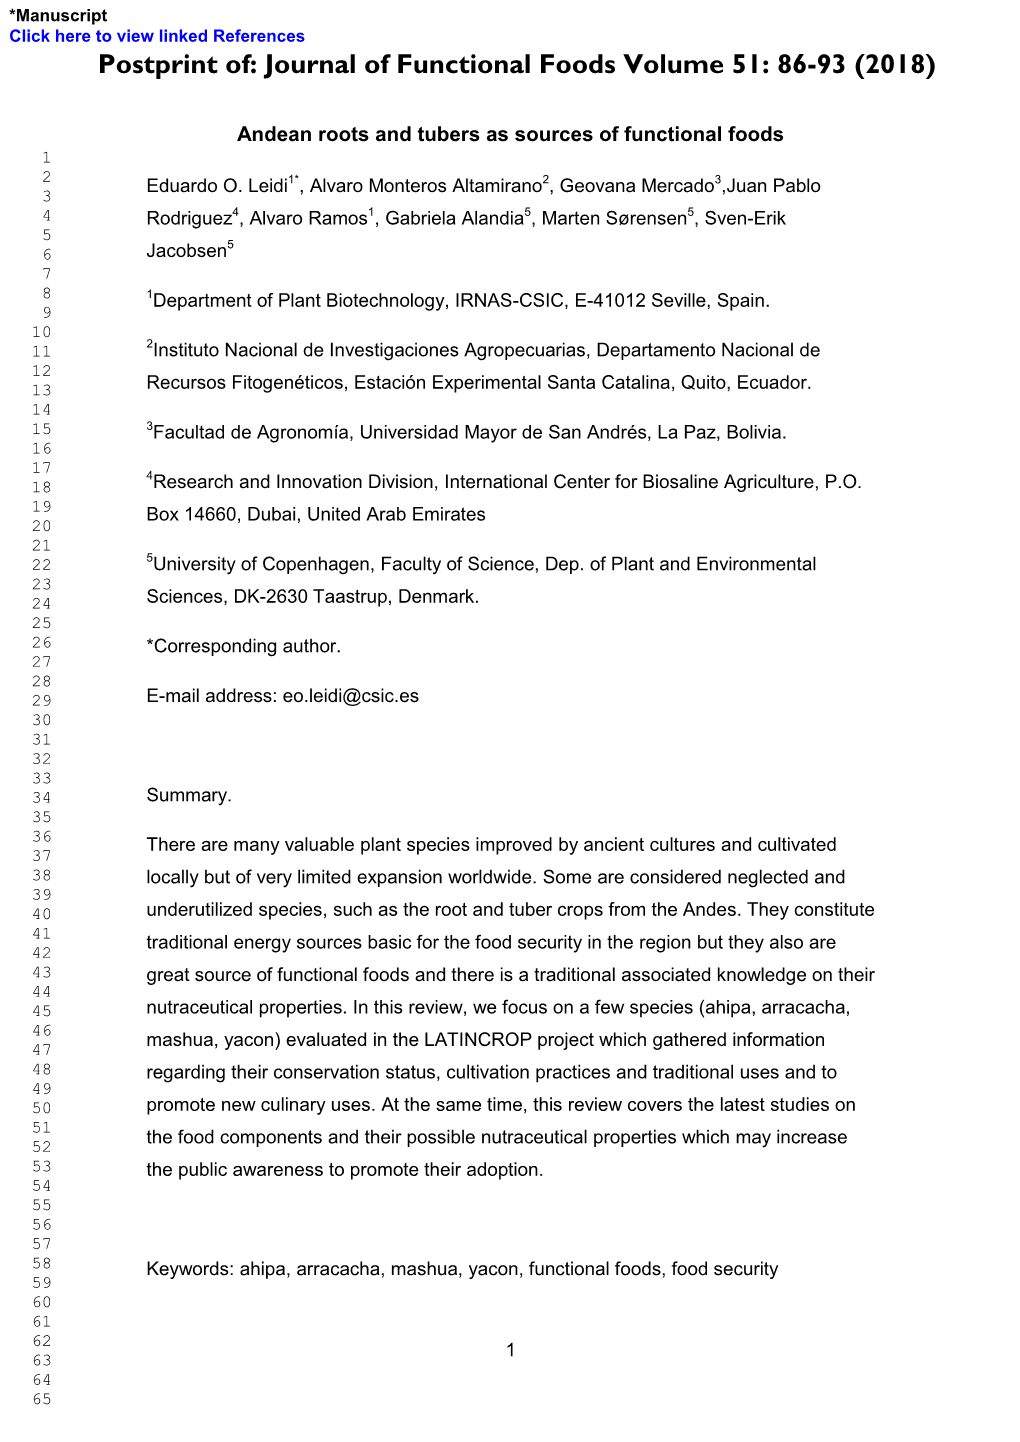 Postprint Of: Journal of Functional Foods Volume 51: 86-93 (2018)